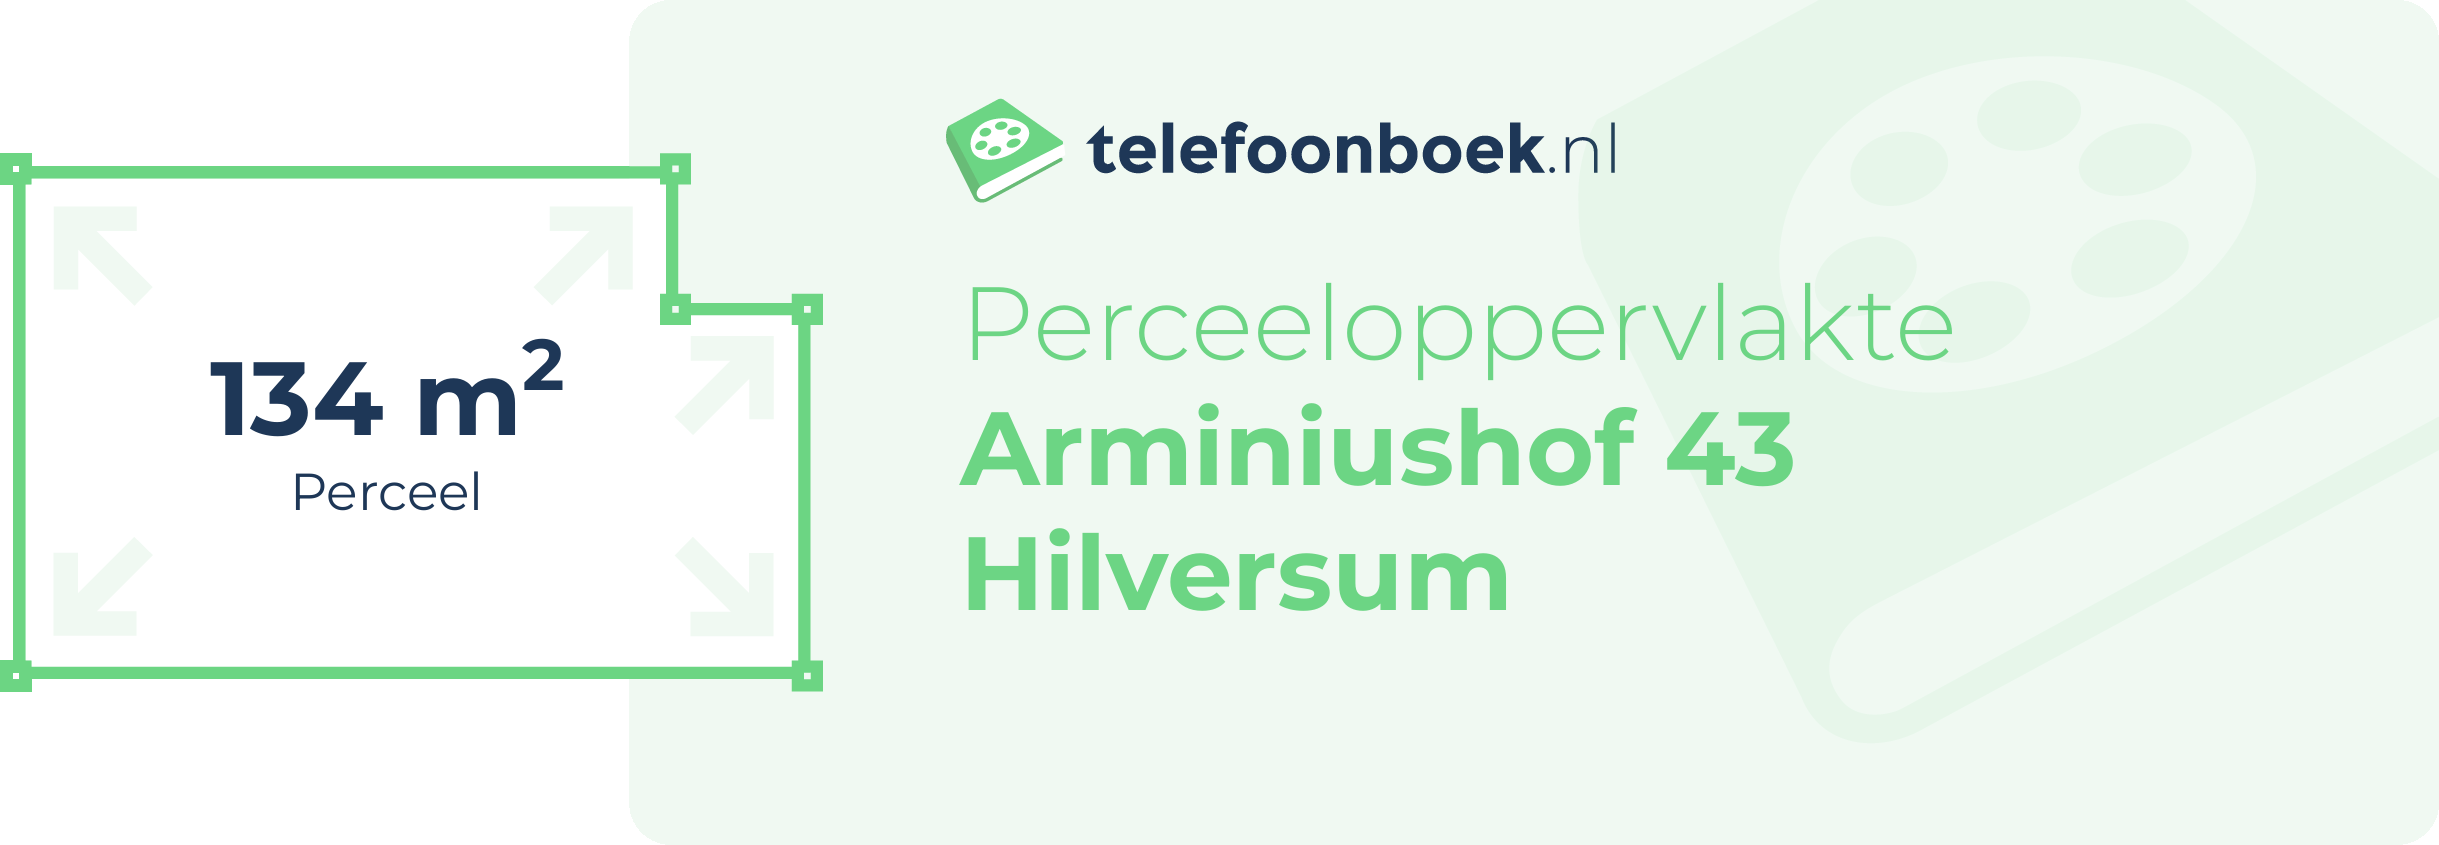 Perceeloppervlakte Arminiushof 43 Hilversum